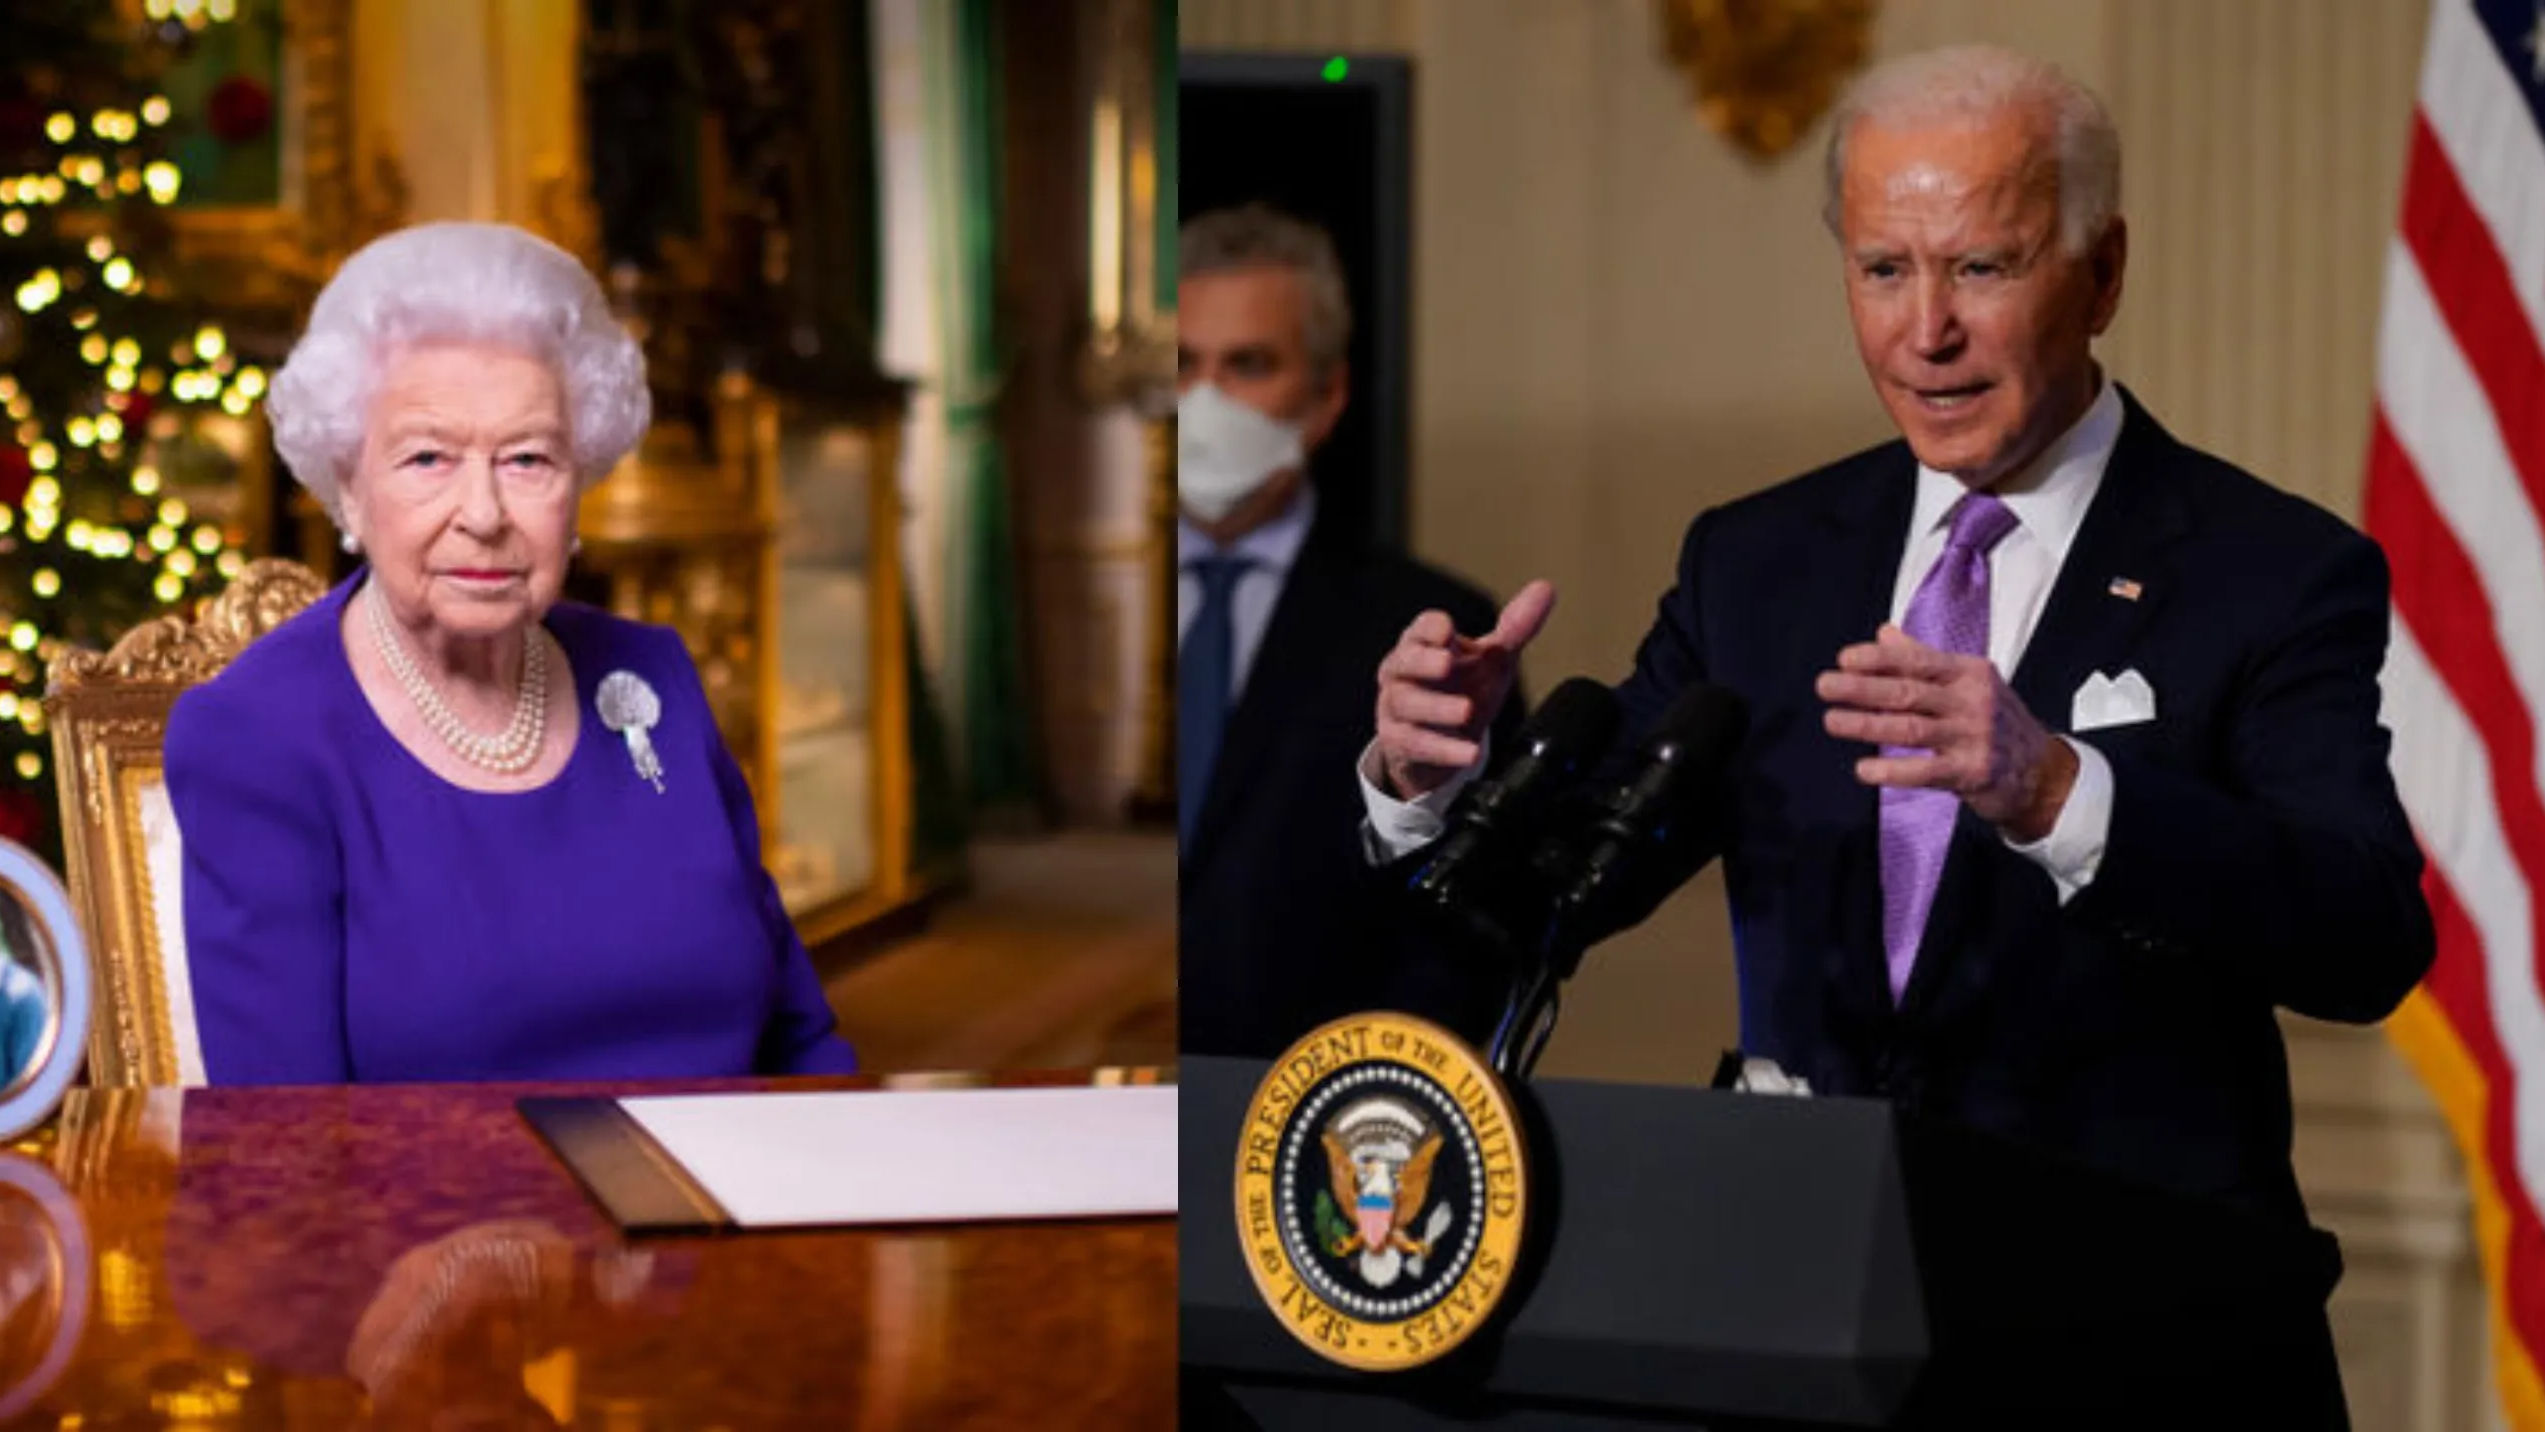 Queen Elizabeth II to host Joe Biden at Buckingham Palace ahead of G7 summit: Report